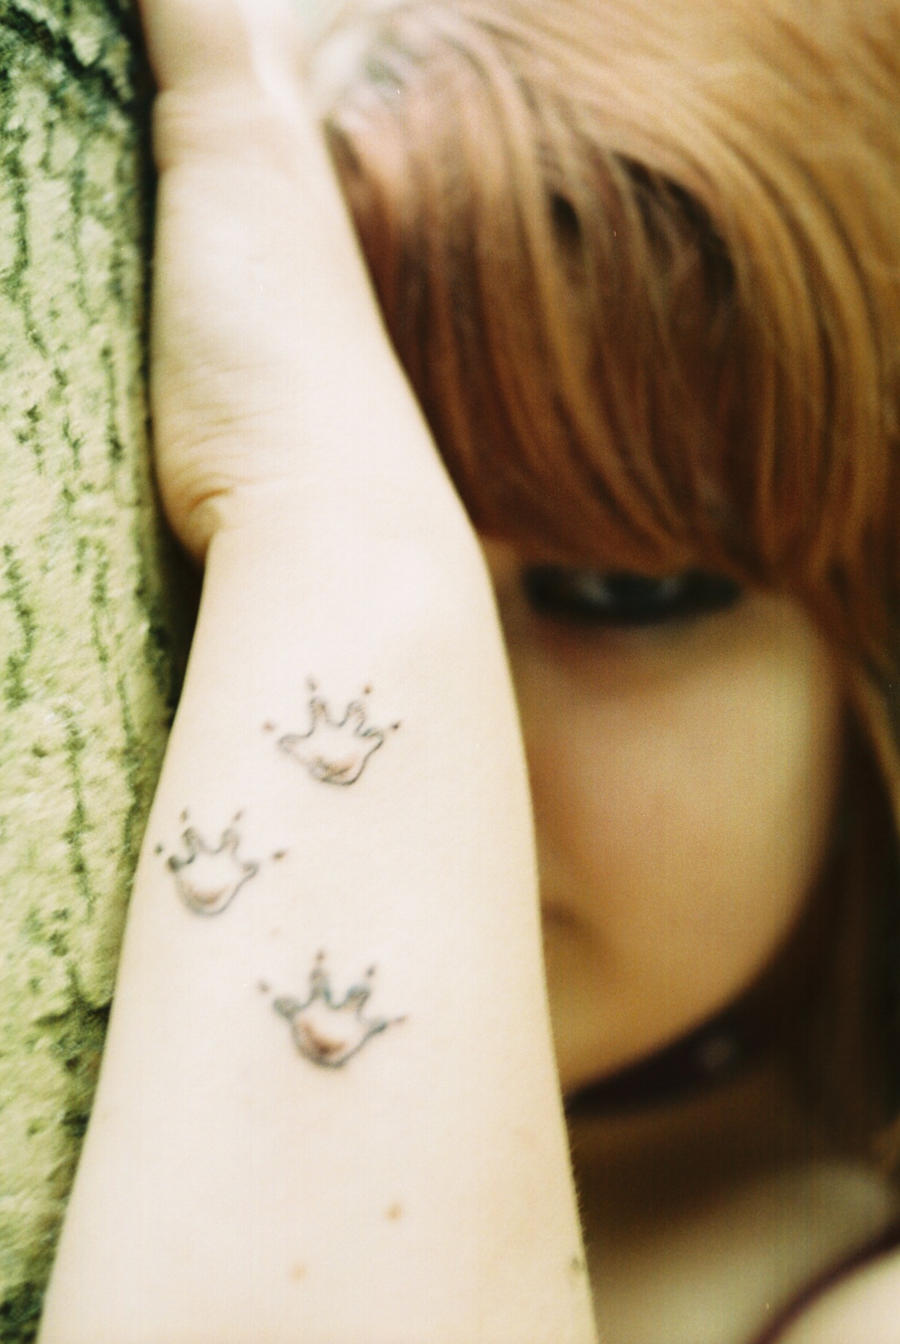 My Rat Paw Tattoo by Allysun